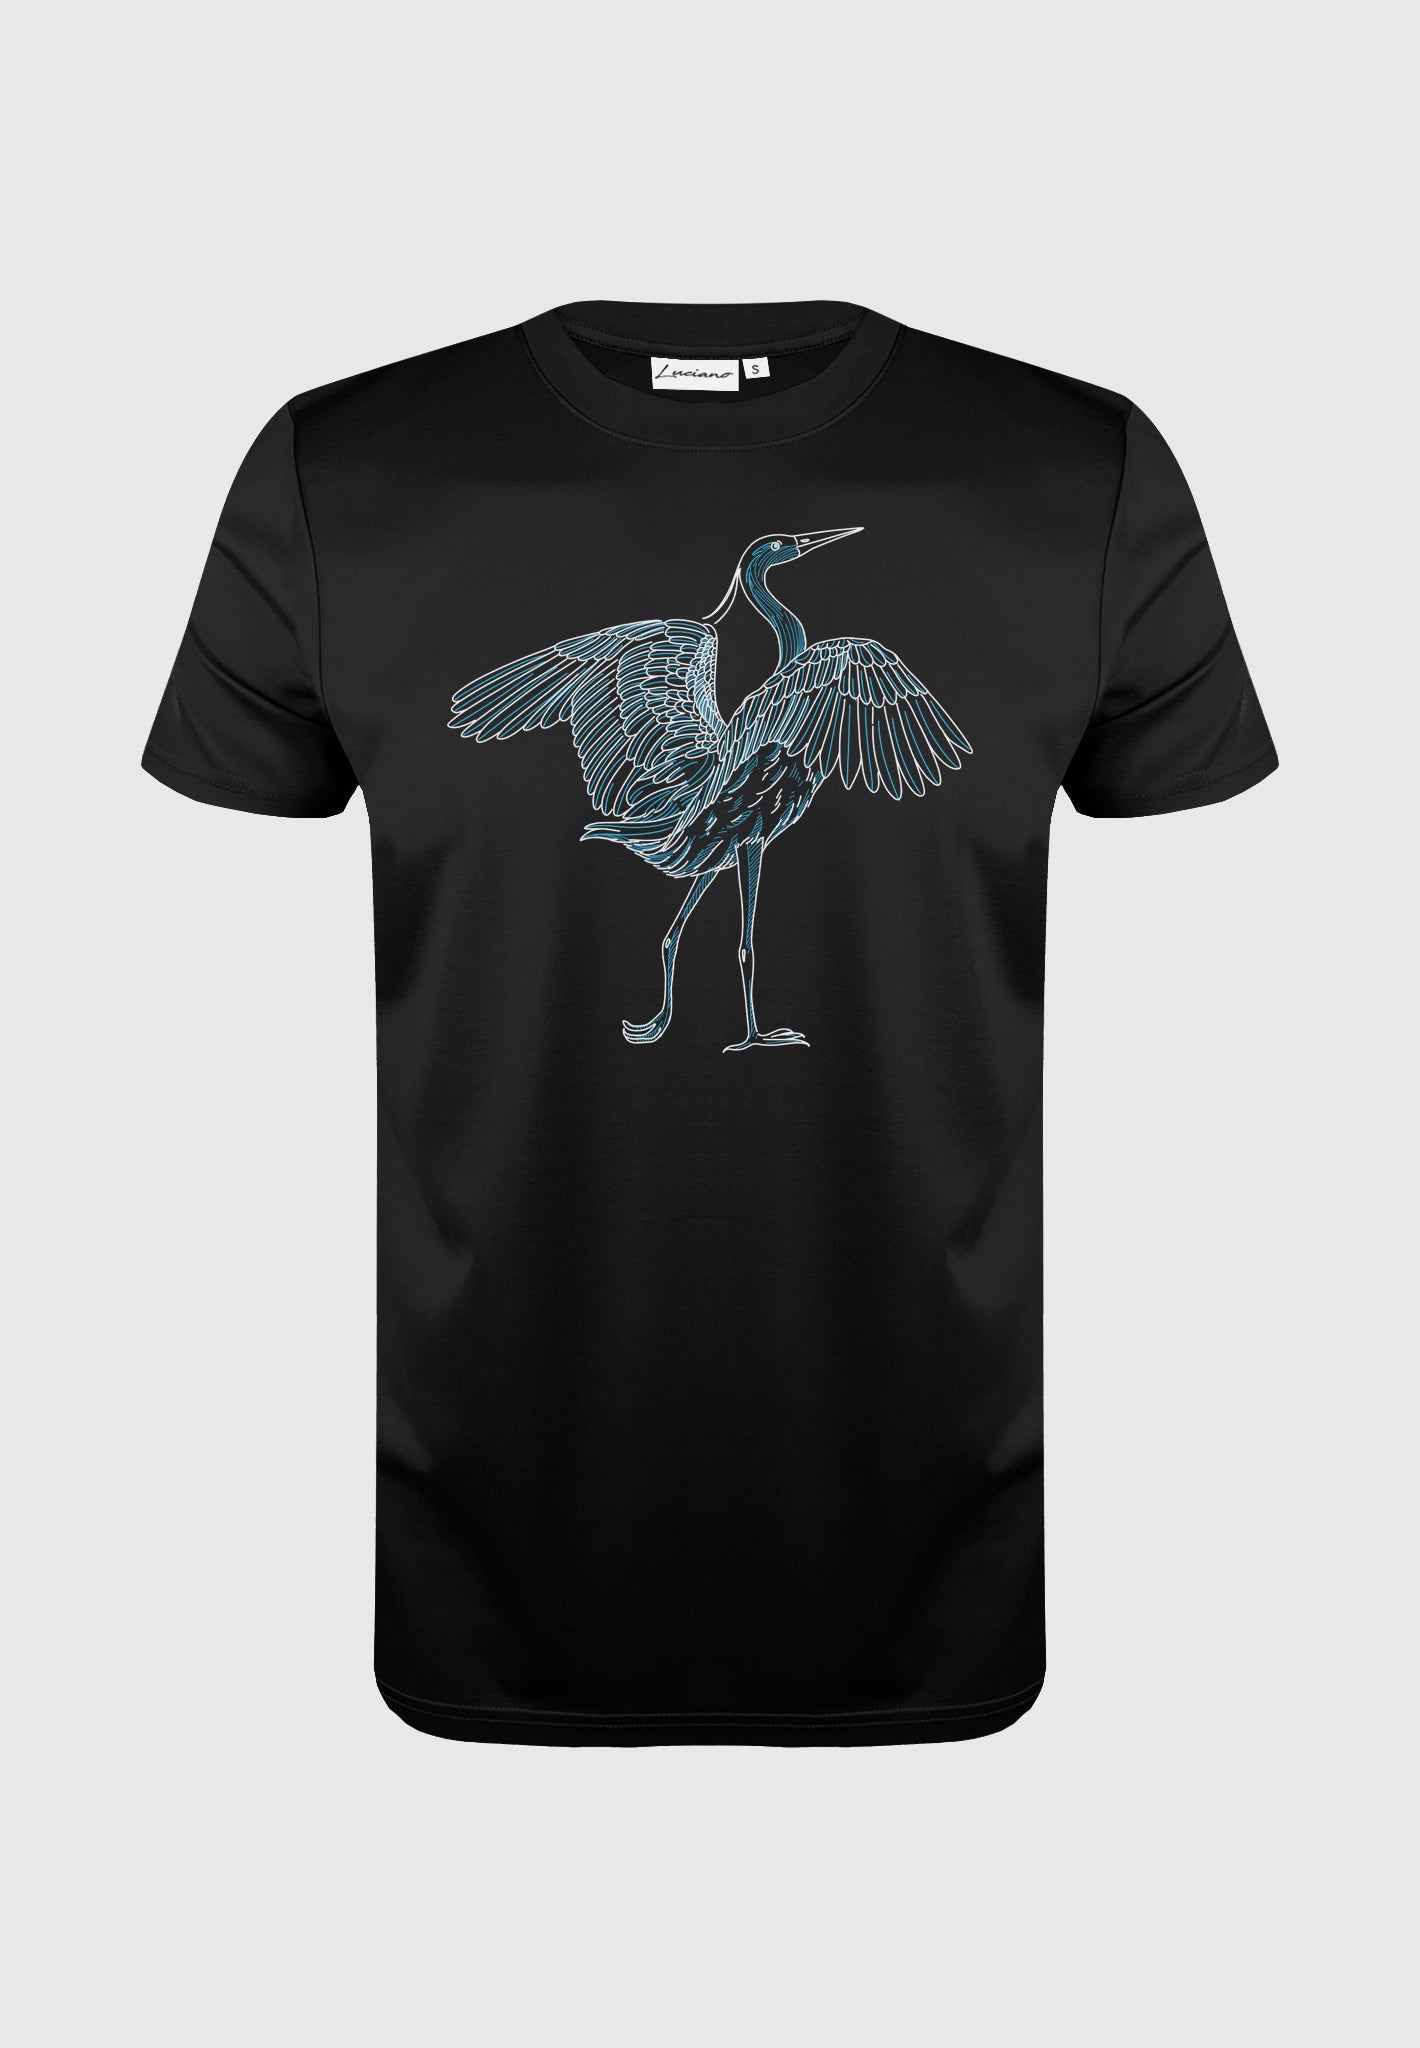 Heron Black Luxury T-Shirt